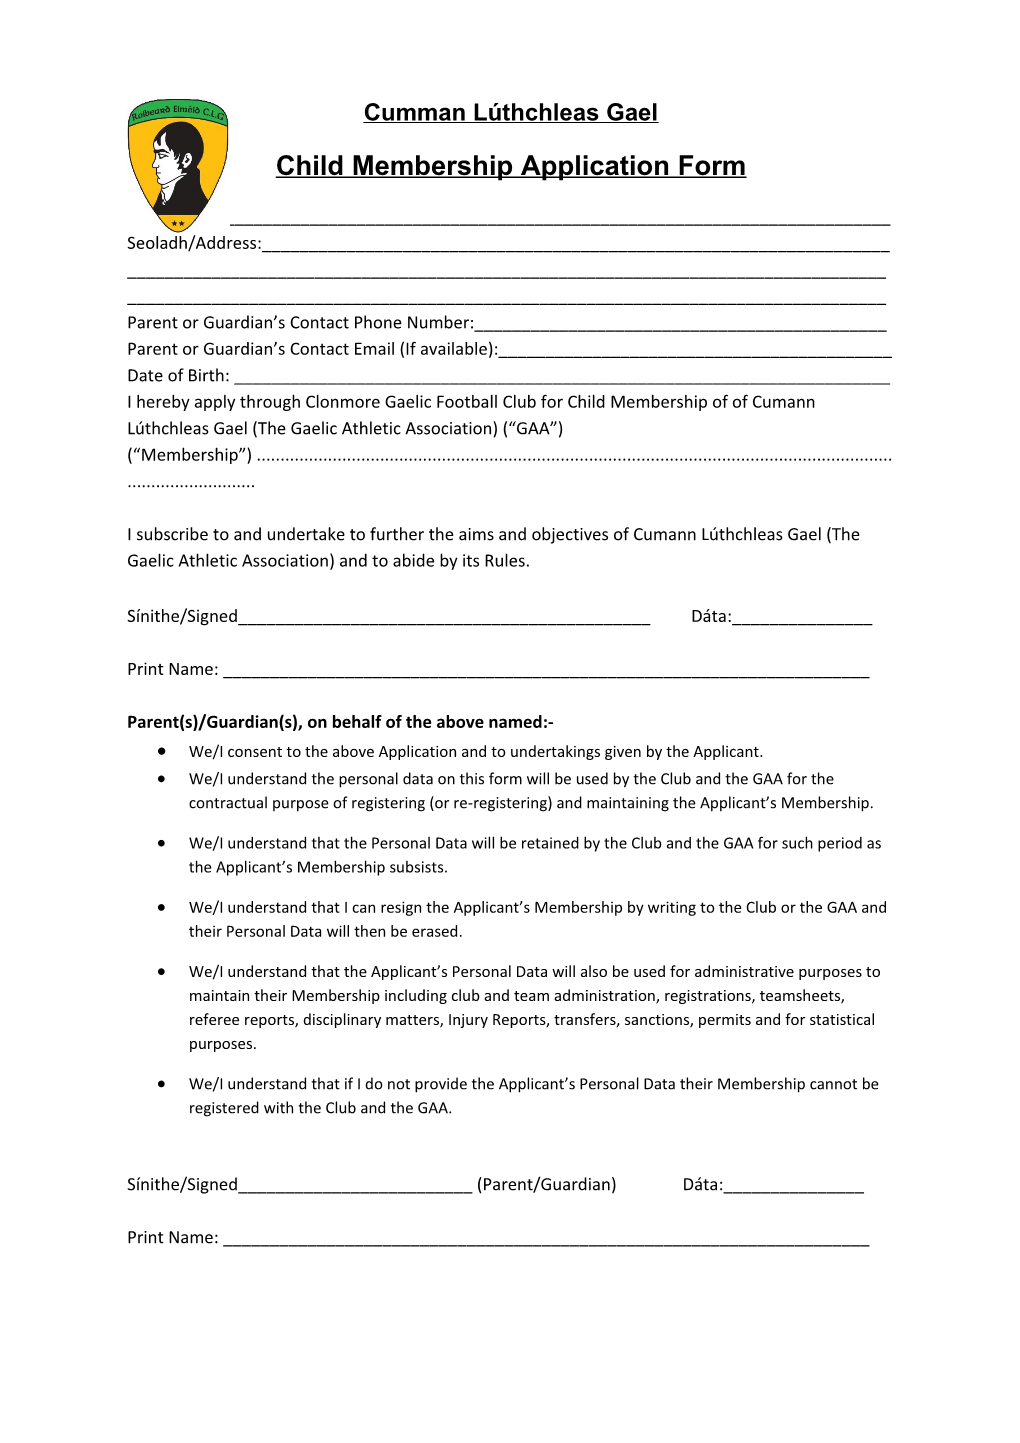 Child Membership Application Form